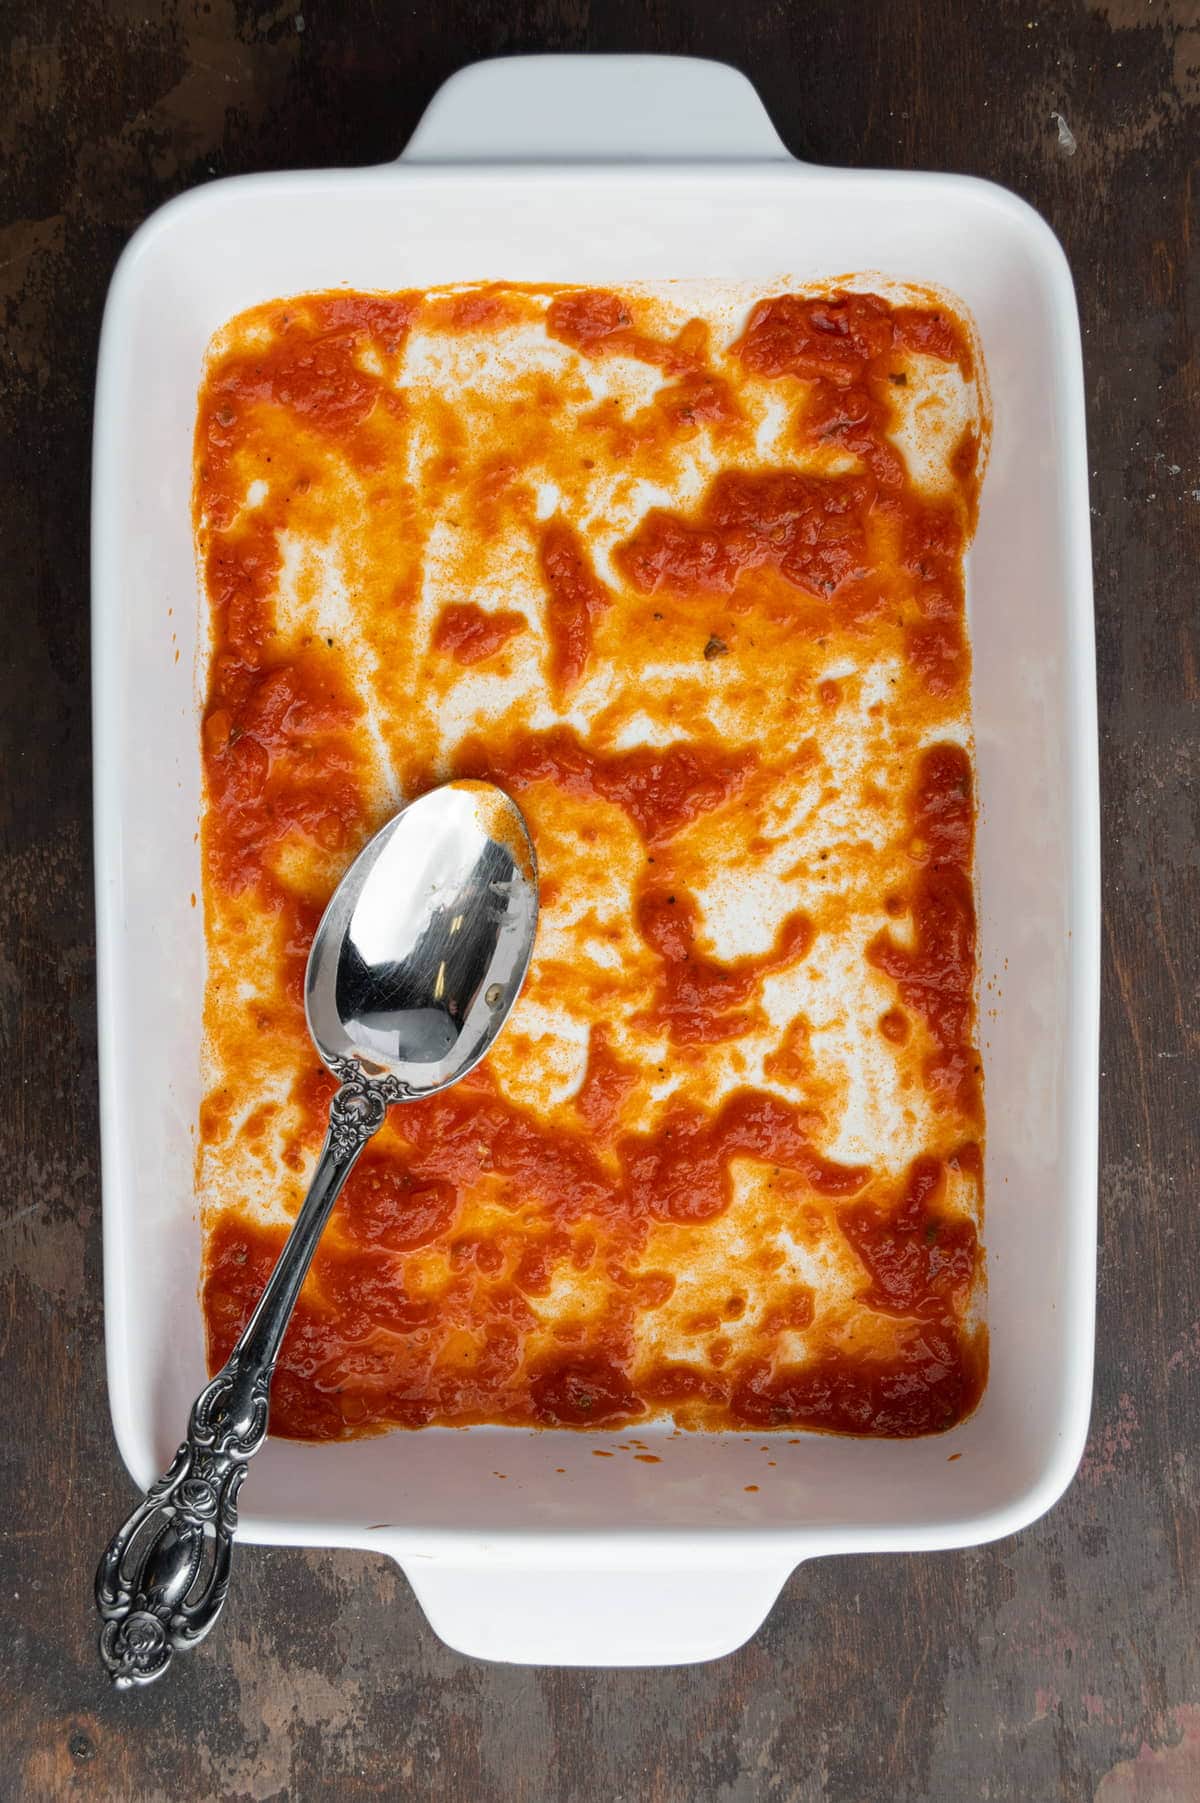 https://marleysmenu.com/wp-content/uploads/2022/07/Meatless-Lasagna-Coating-bottom-of-baking-dish-with-sauce.jpg